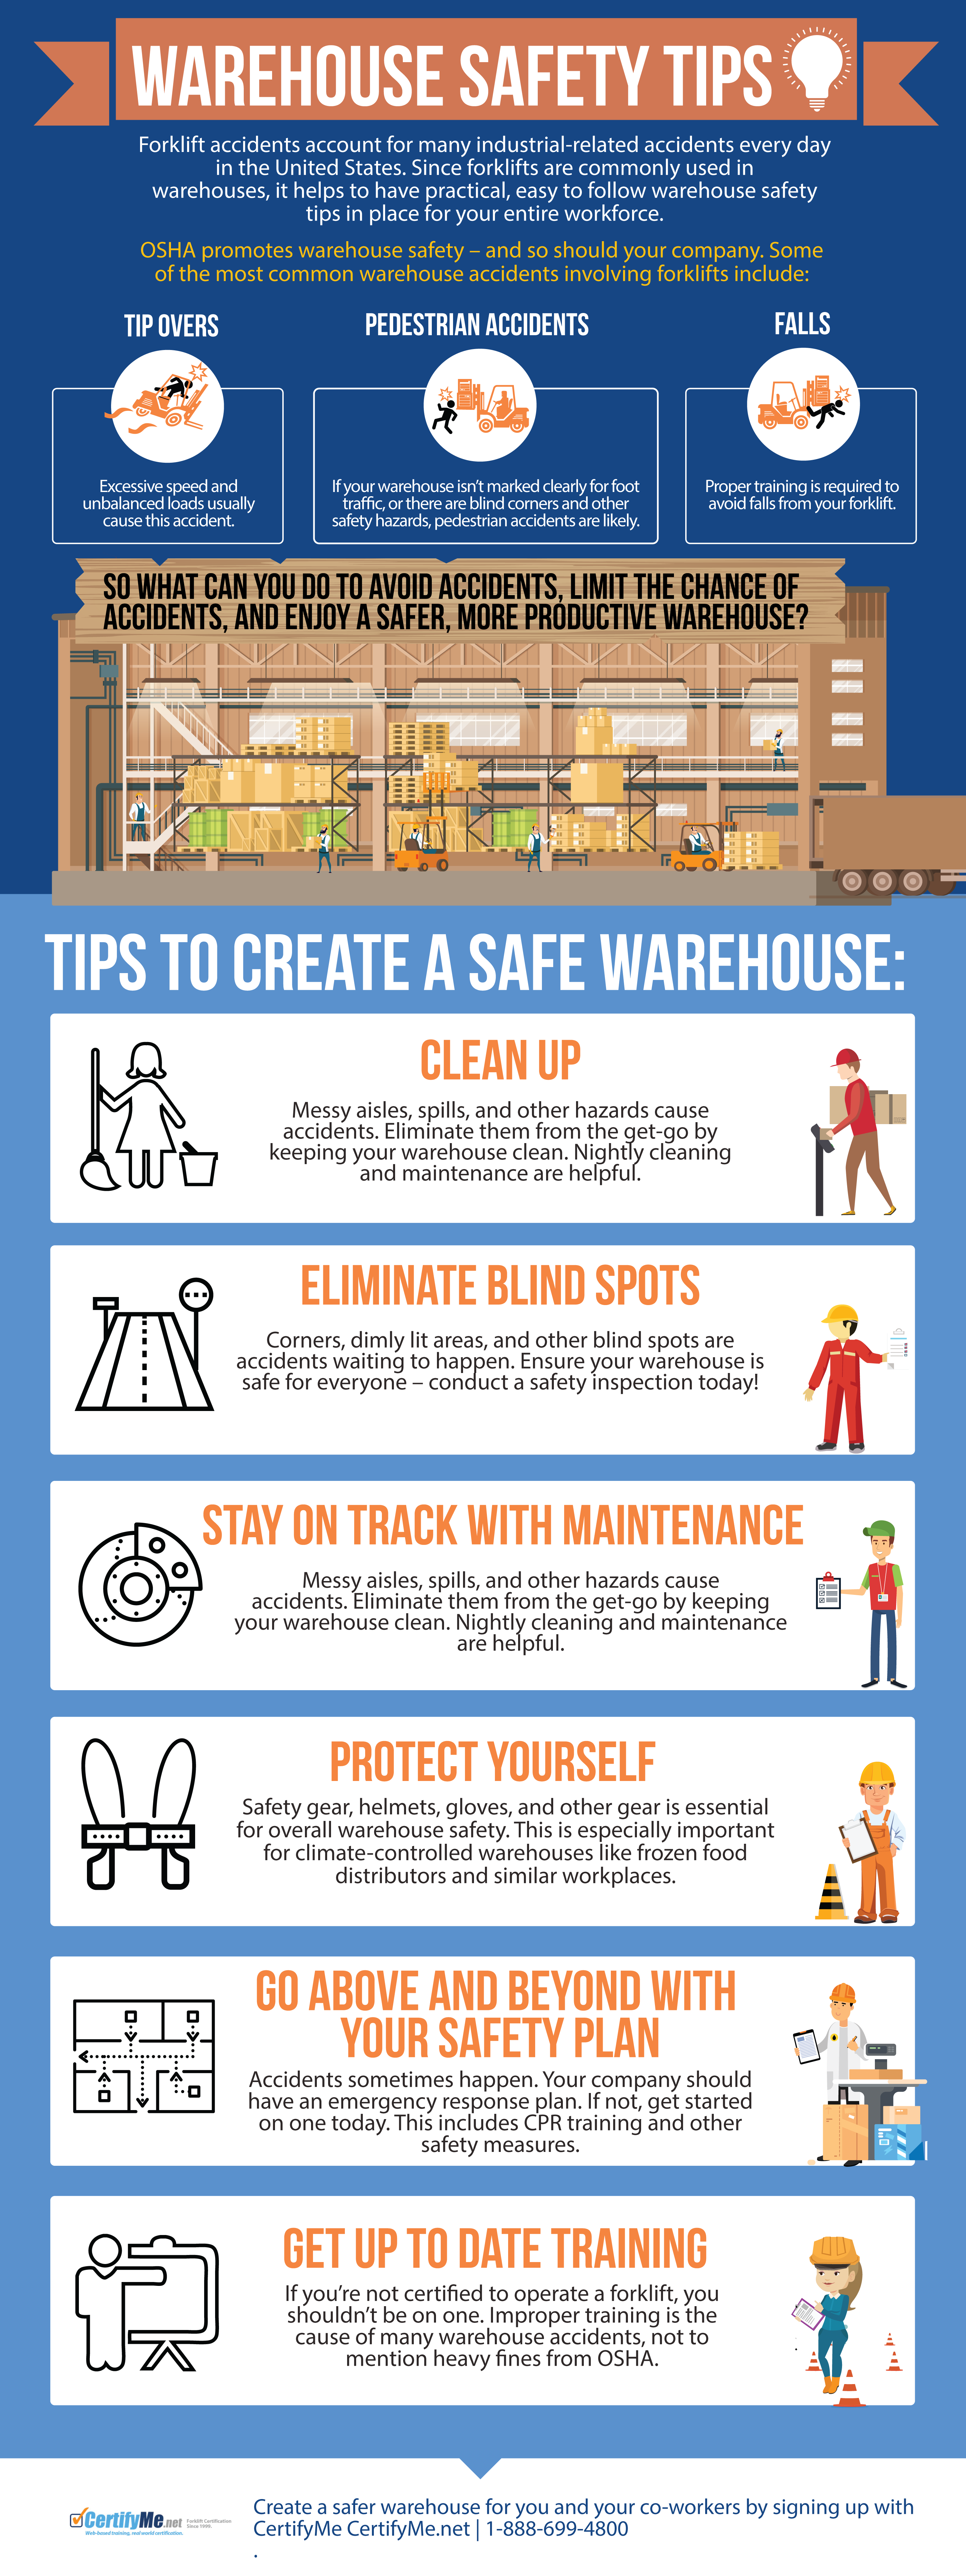 Warehouse Safety Topics 2019 » K3LH.com